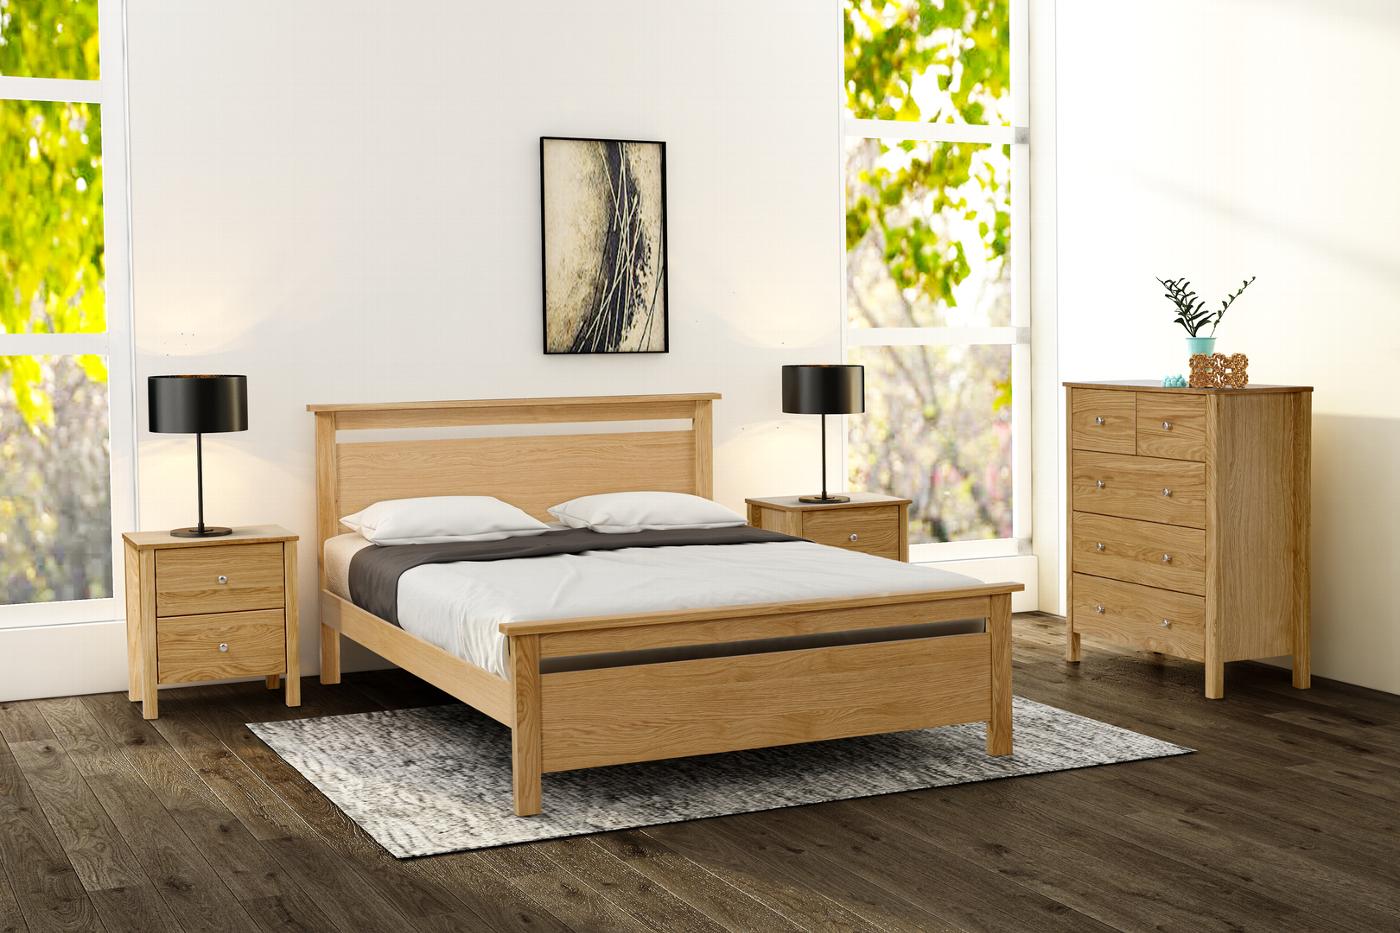 Nero wooden bed frame